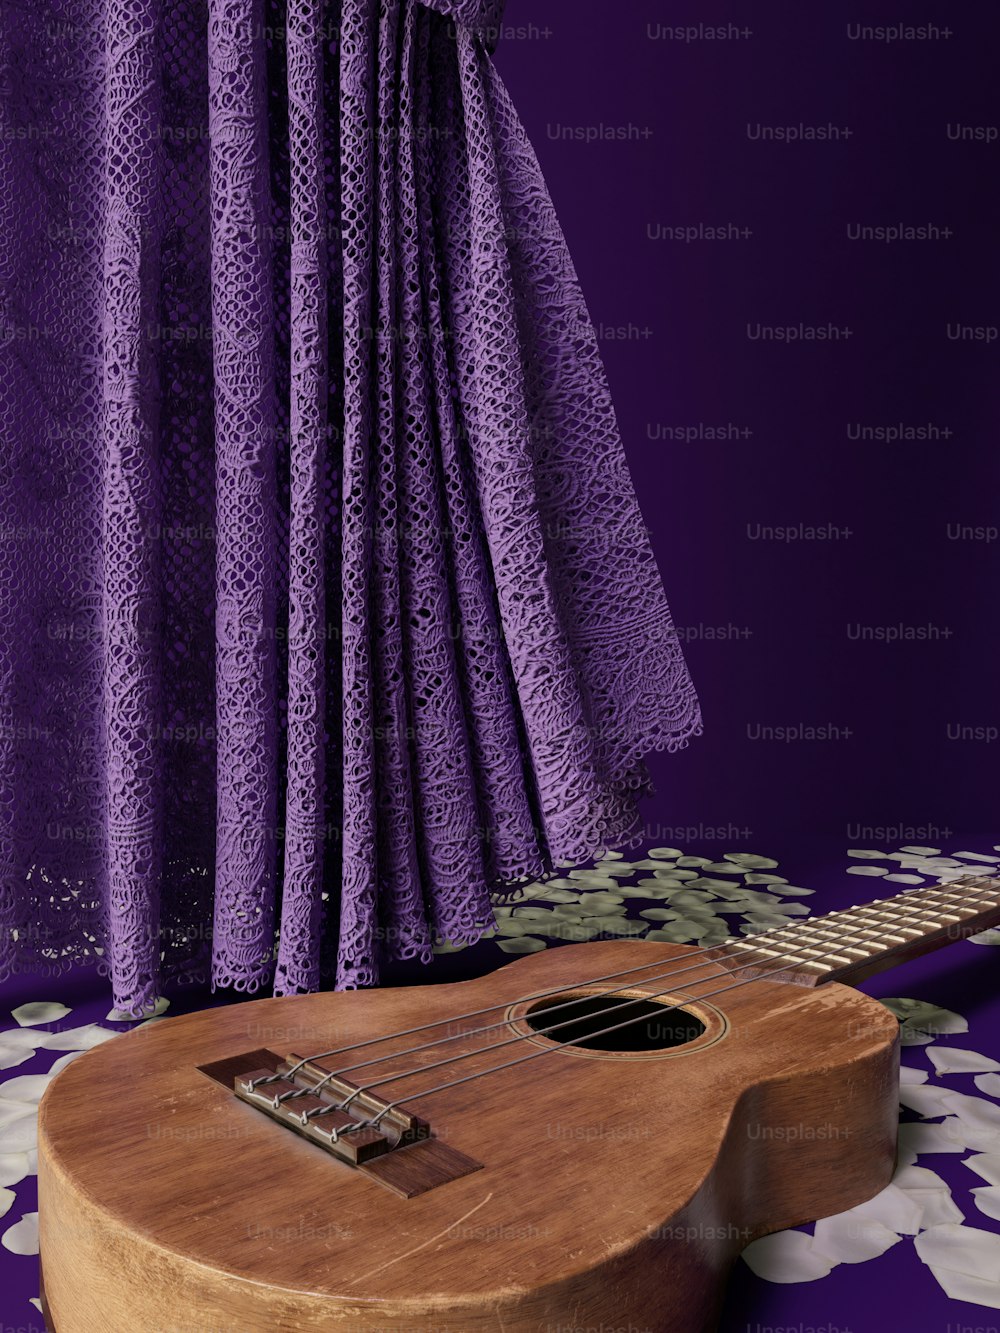 Un ukelele se sienta frente a una cortina púrpura